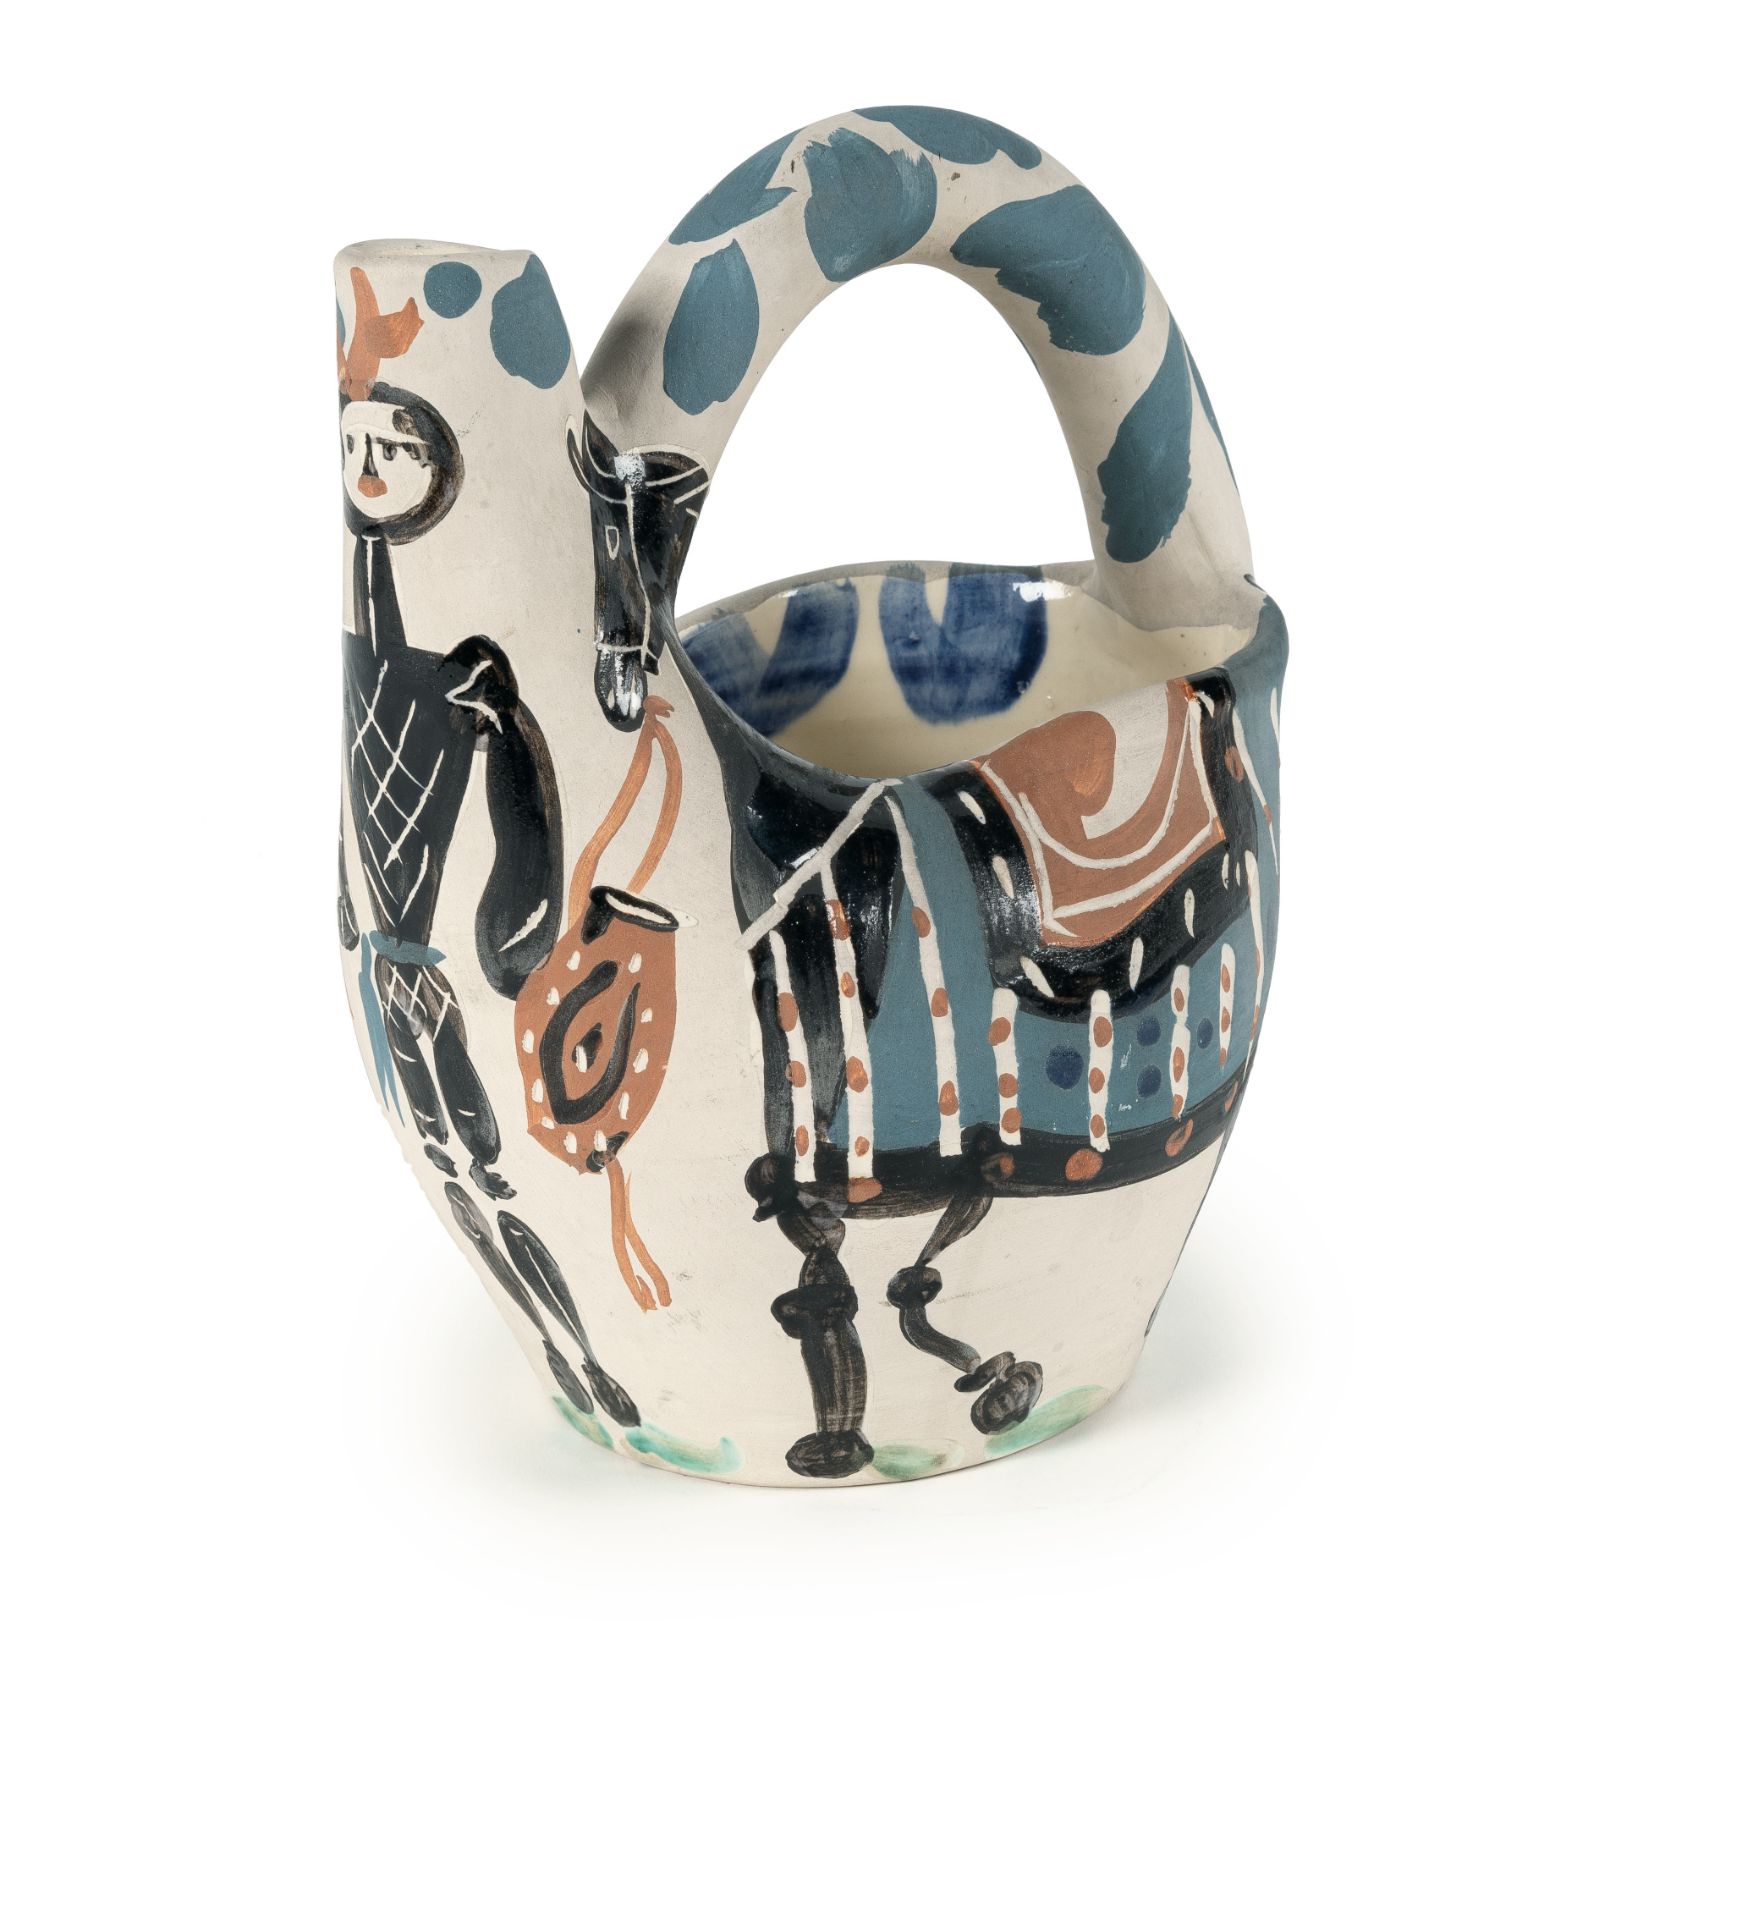 Pablo Picasso (1881 Málaga - Mougins bei Cannes 1973) – Cavalier et cheval.Ceramic jug. White clay